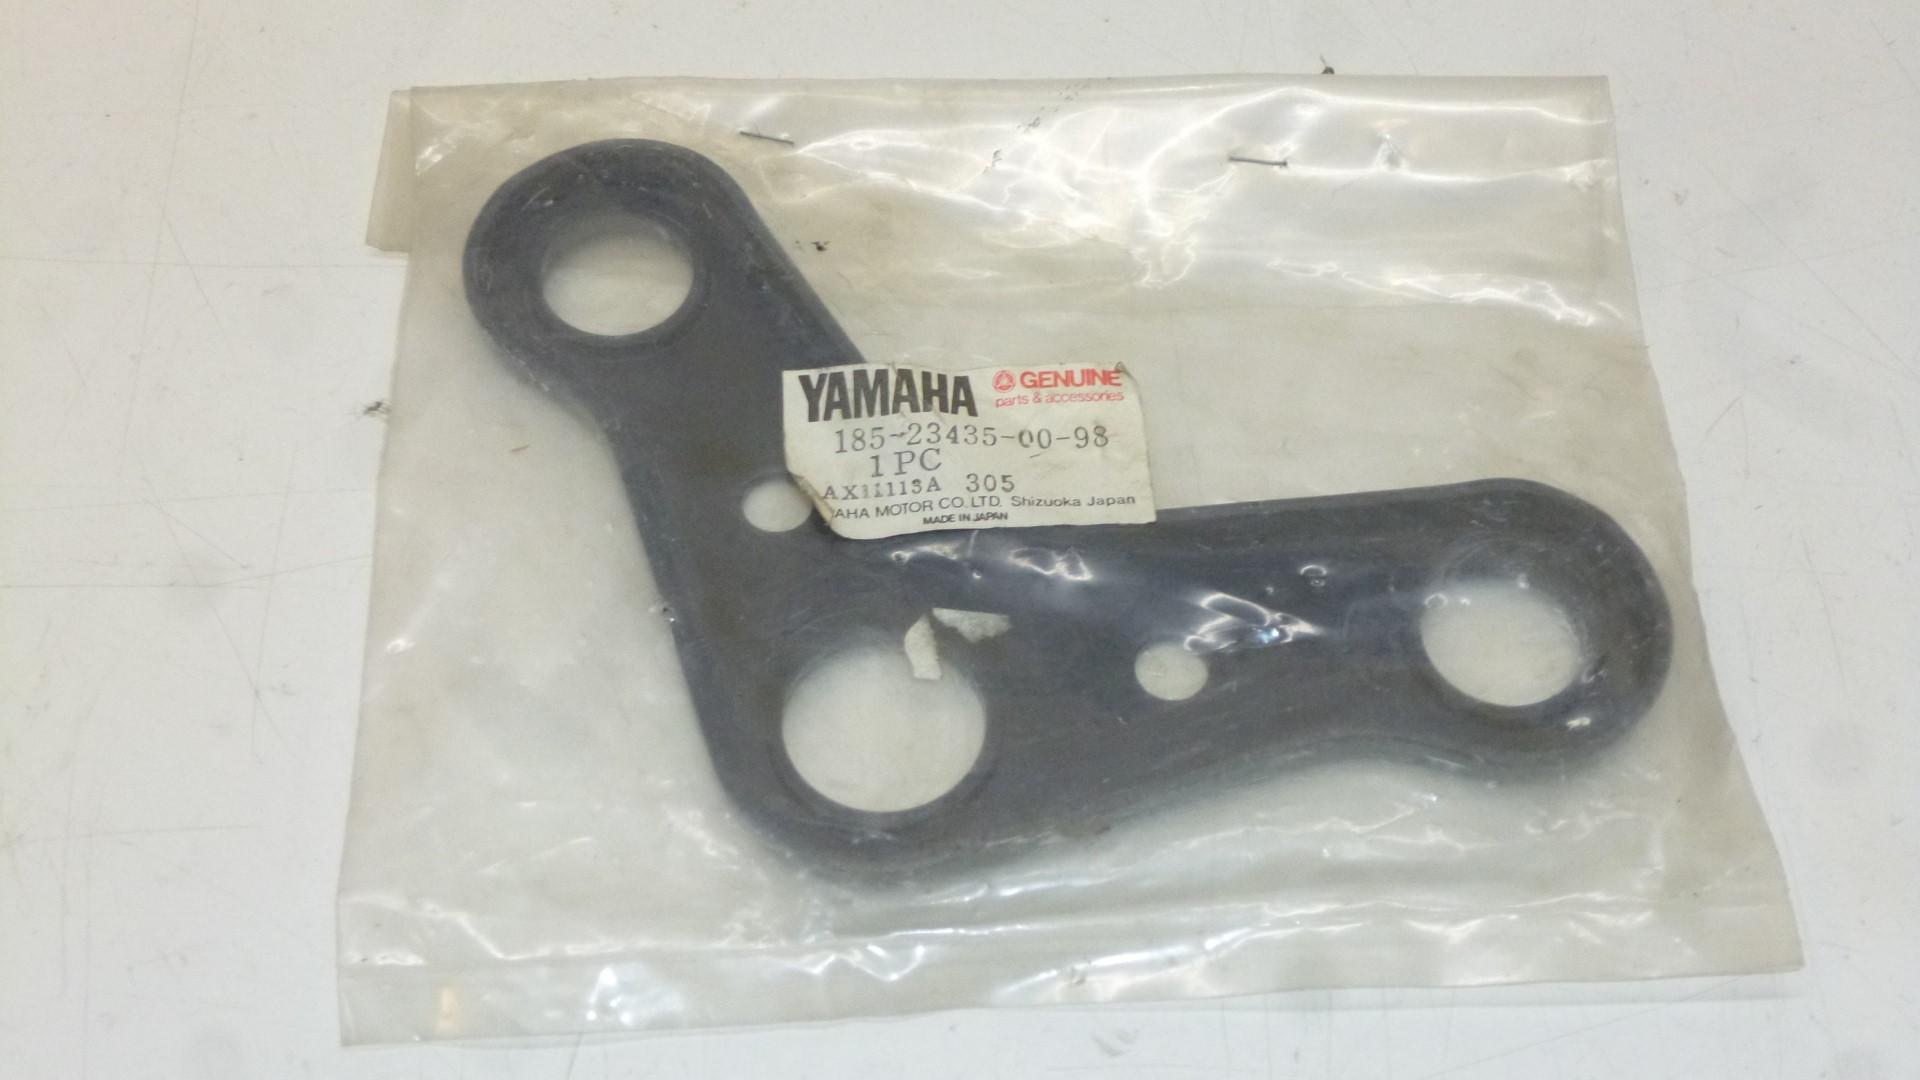 Gabelbrücke Lenkerkrone Federgabel handle crown fork für Yamaha Fs1 185-23435